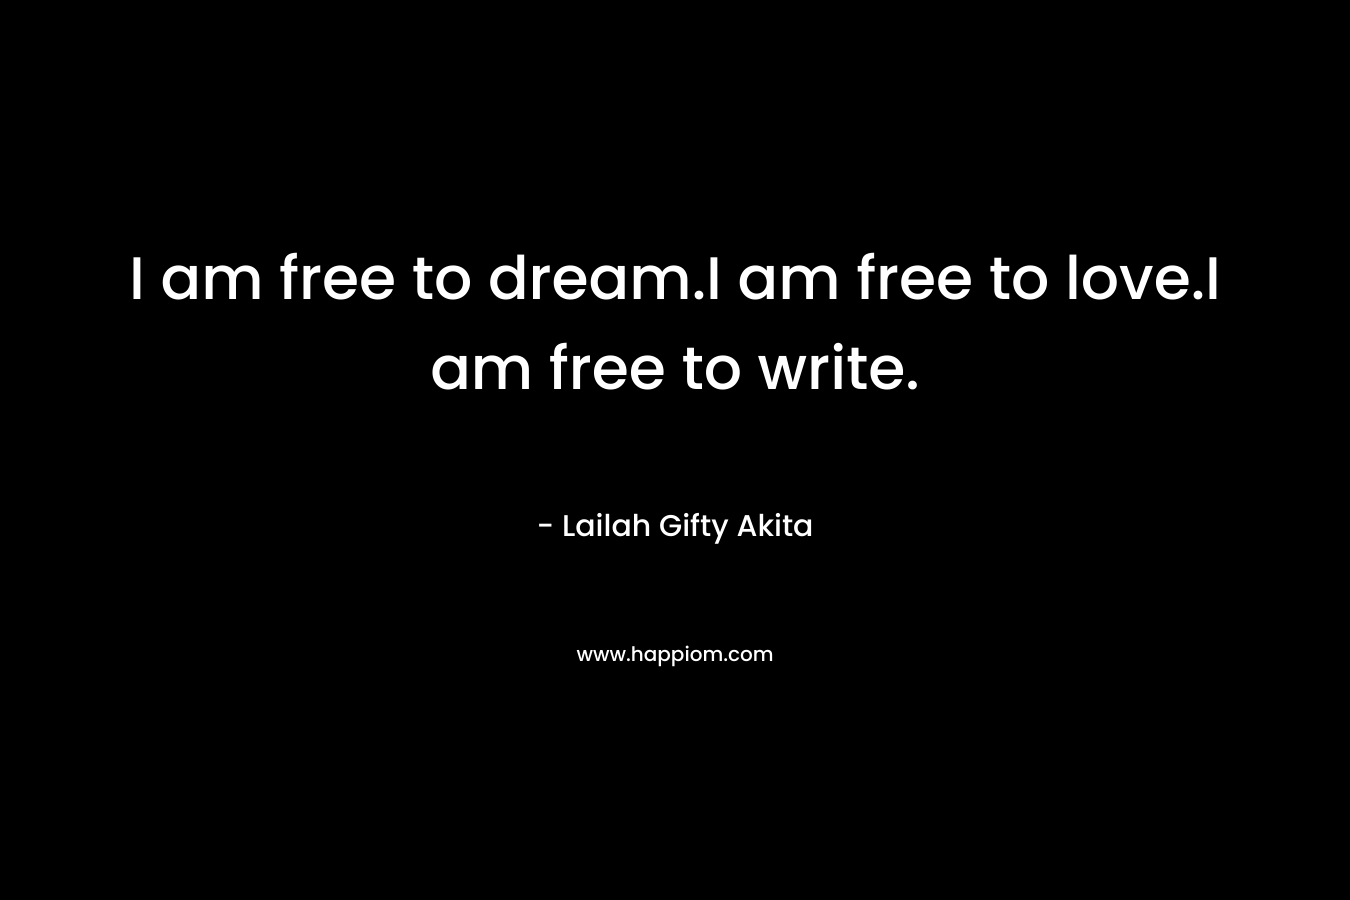 I am free to dream.I am free to love.I am free to write.